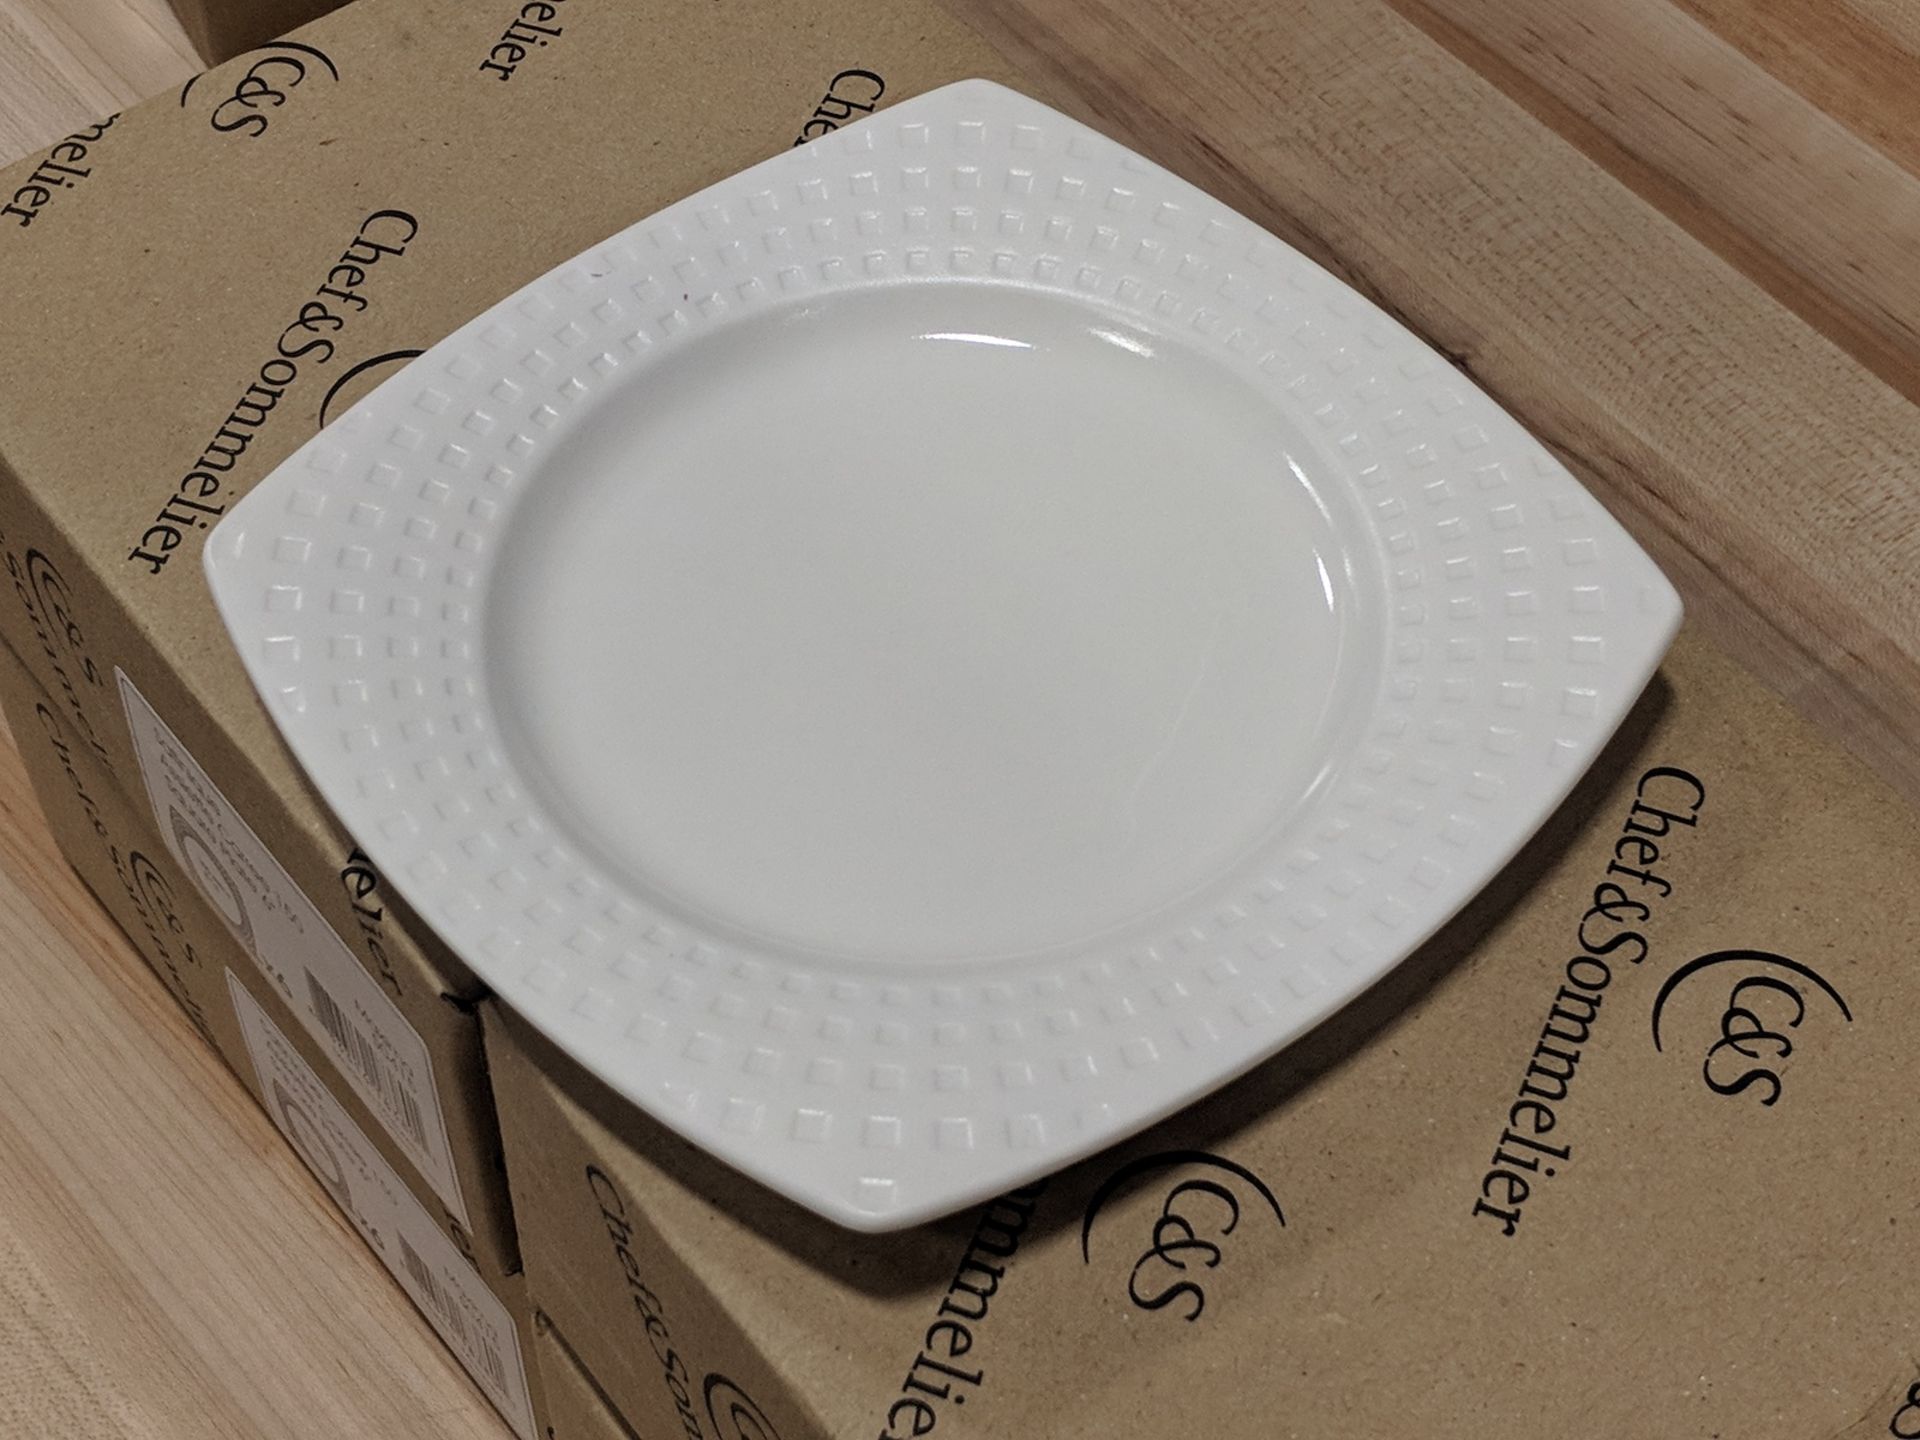 6" Square Plates Arc Cardinal S0415 Bread & Butter Plate, Square, Wide Rim